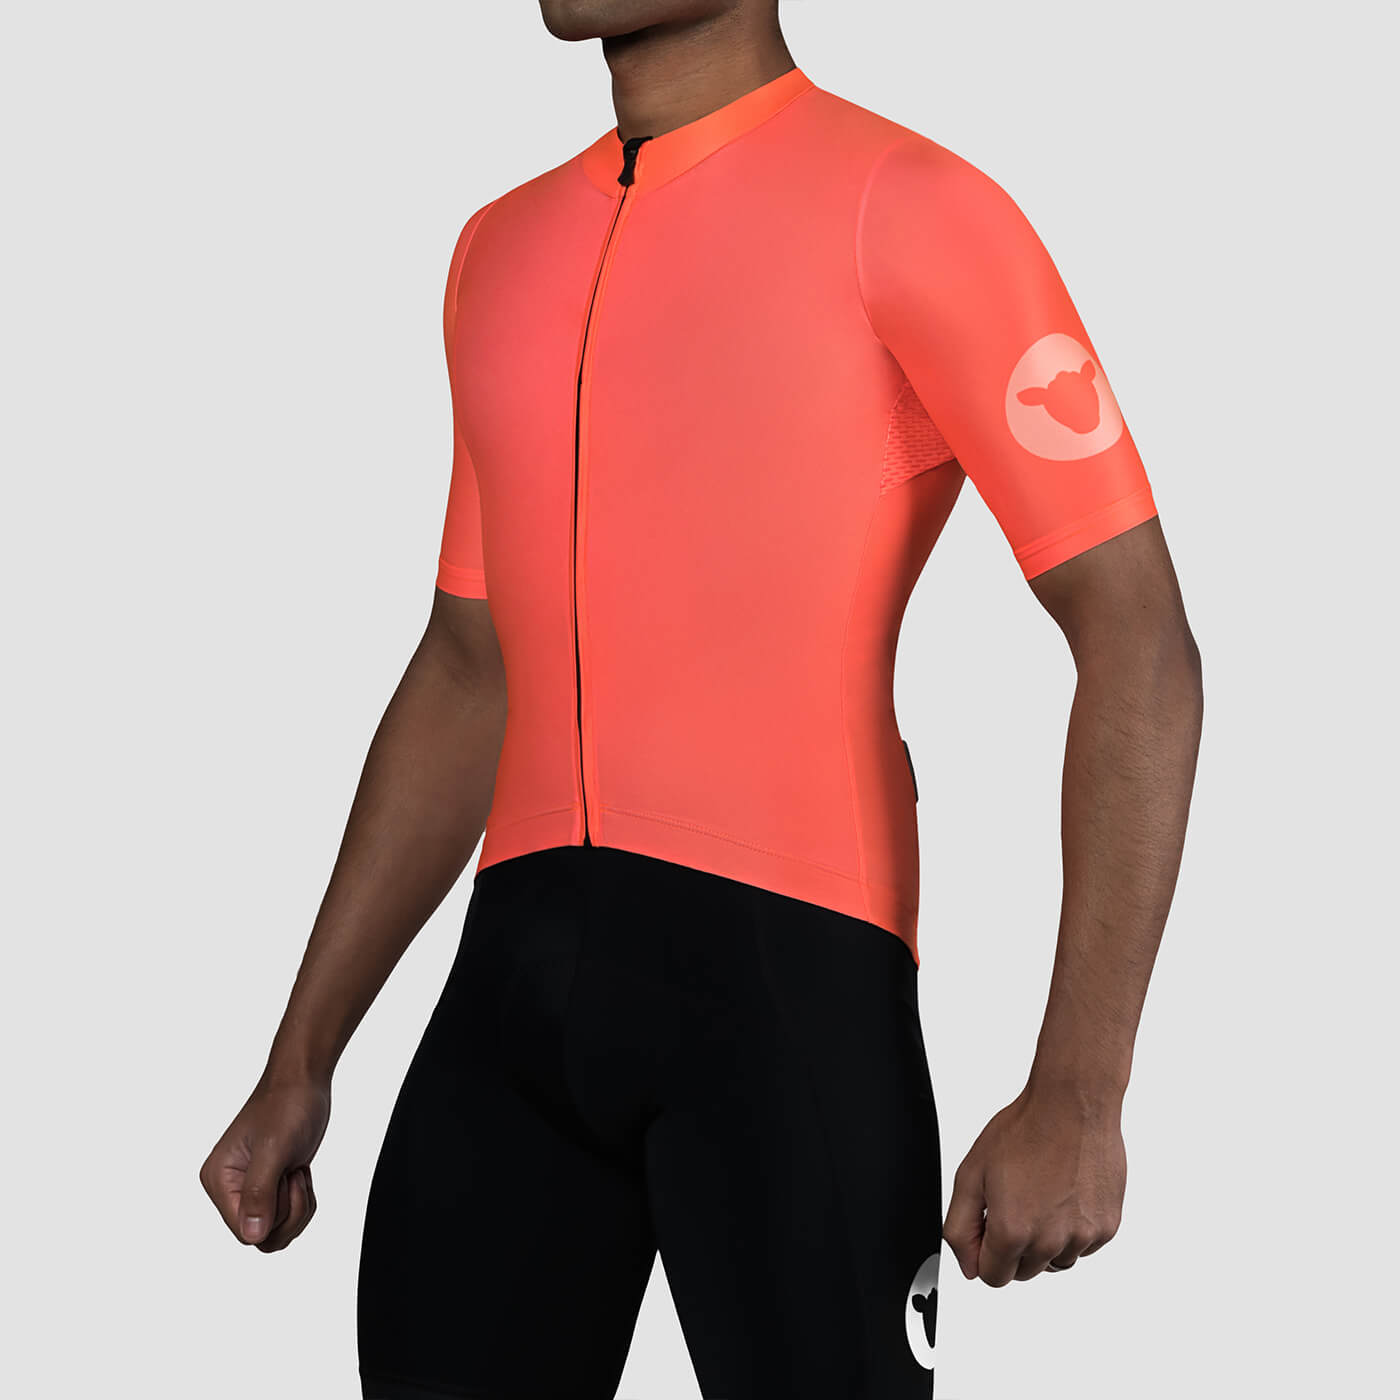 Men's Team Jersey - Neon Orange